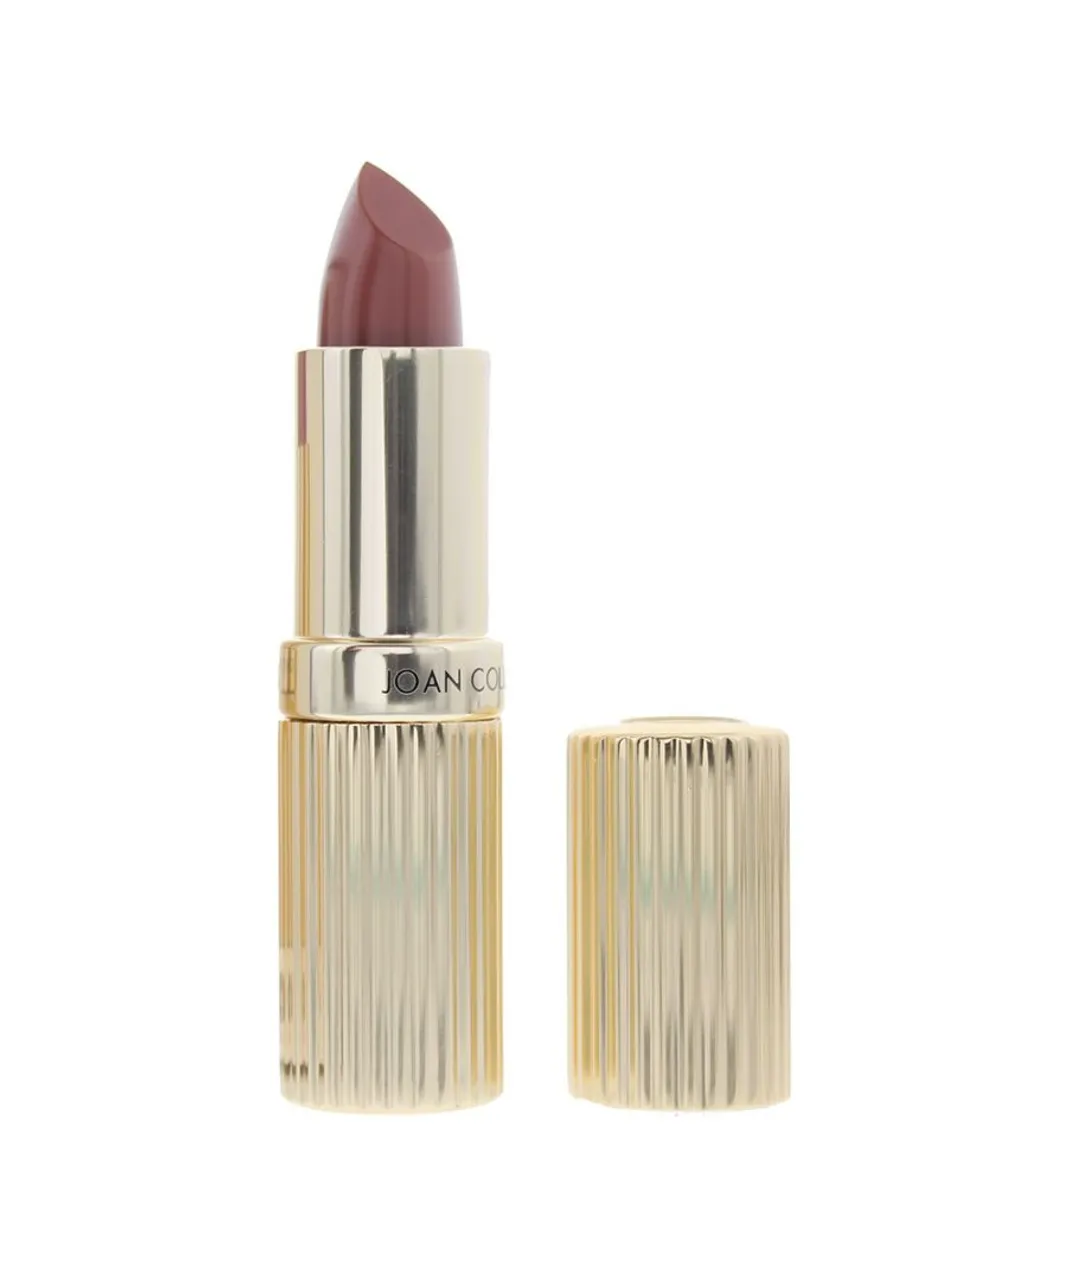 Joan Collins Womens Divine Lips Katrina Cream Lipstick 3.5g - One Size